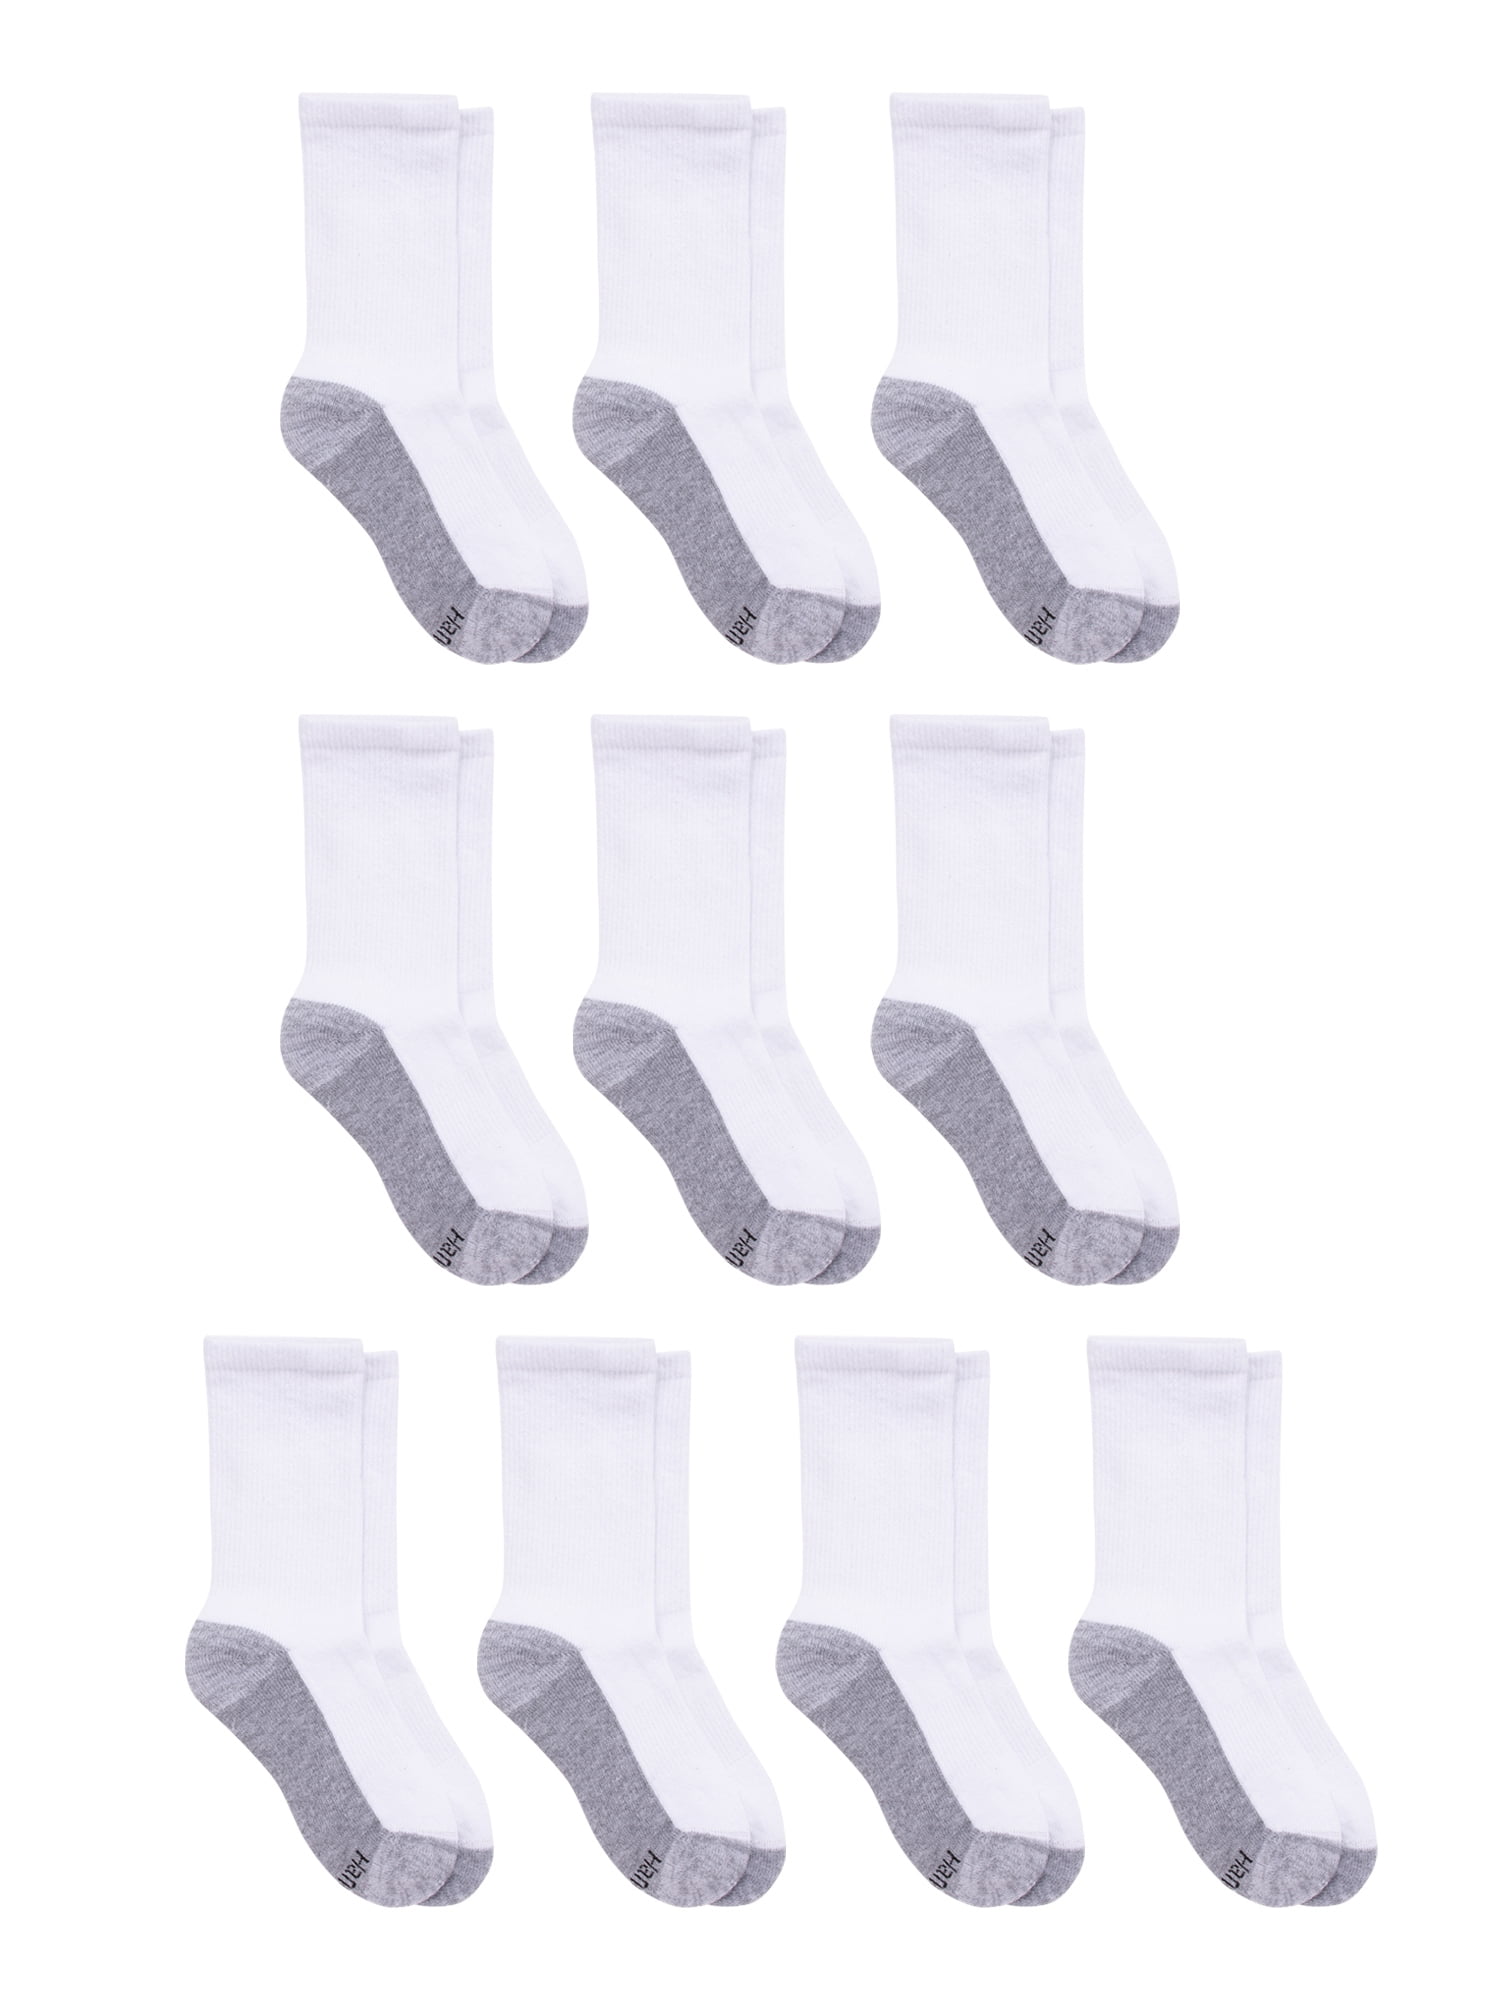 Hanes Boys Double Tough Durability Crew Socks, 10 Pack, Sizes S-L ...